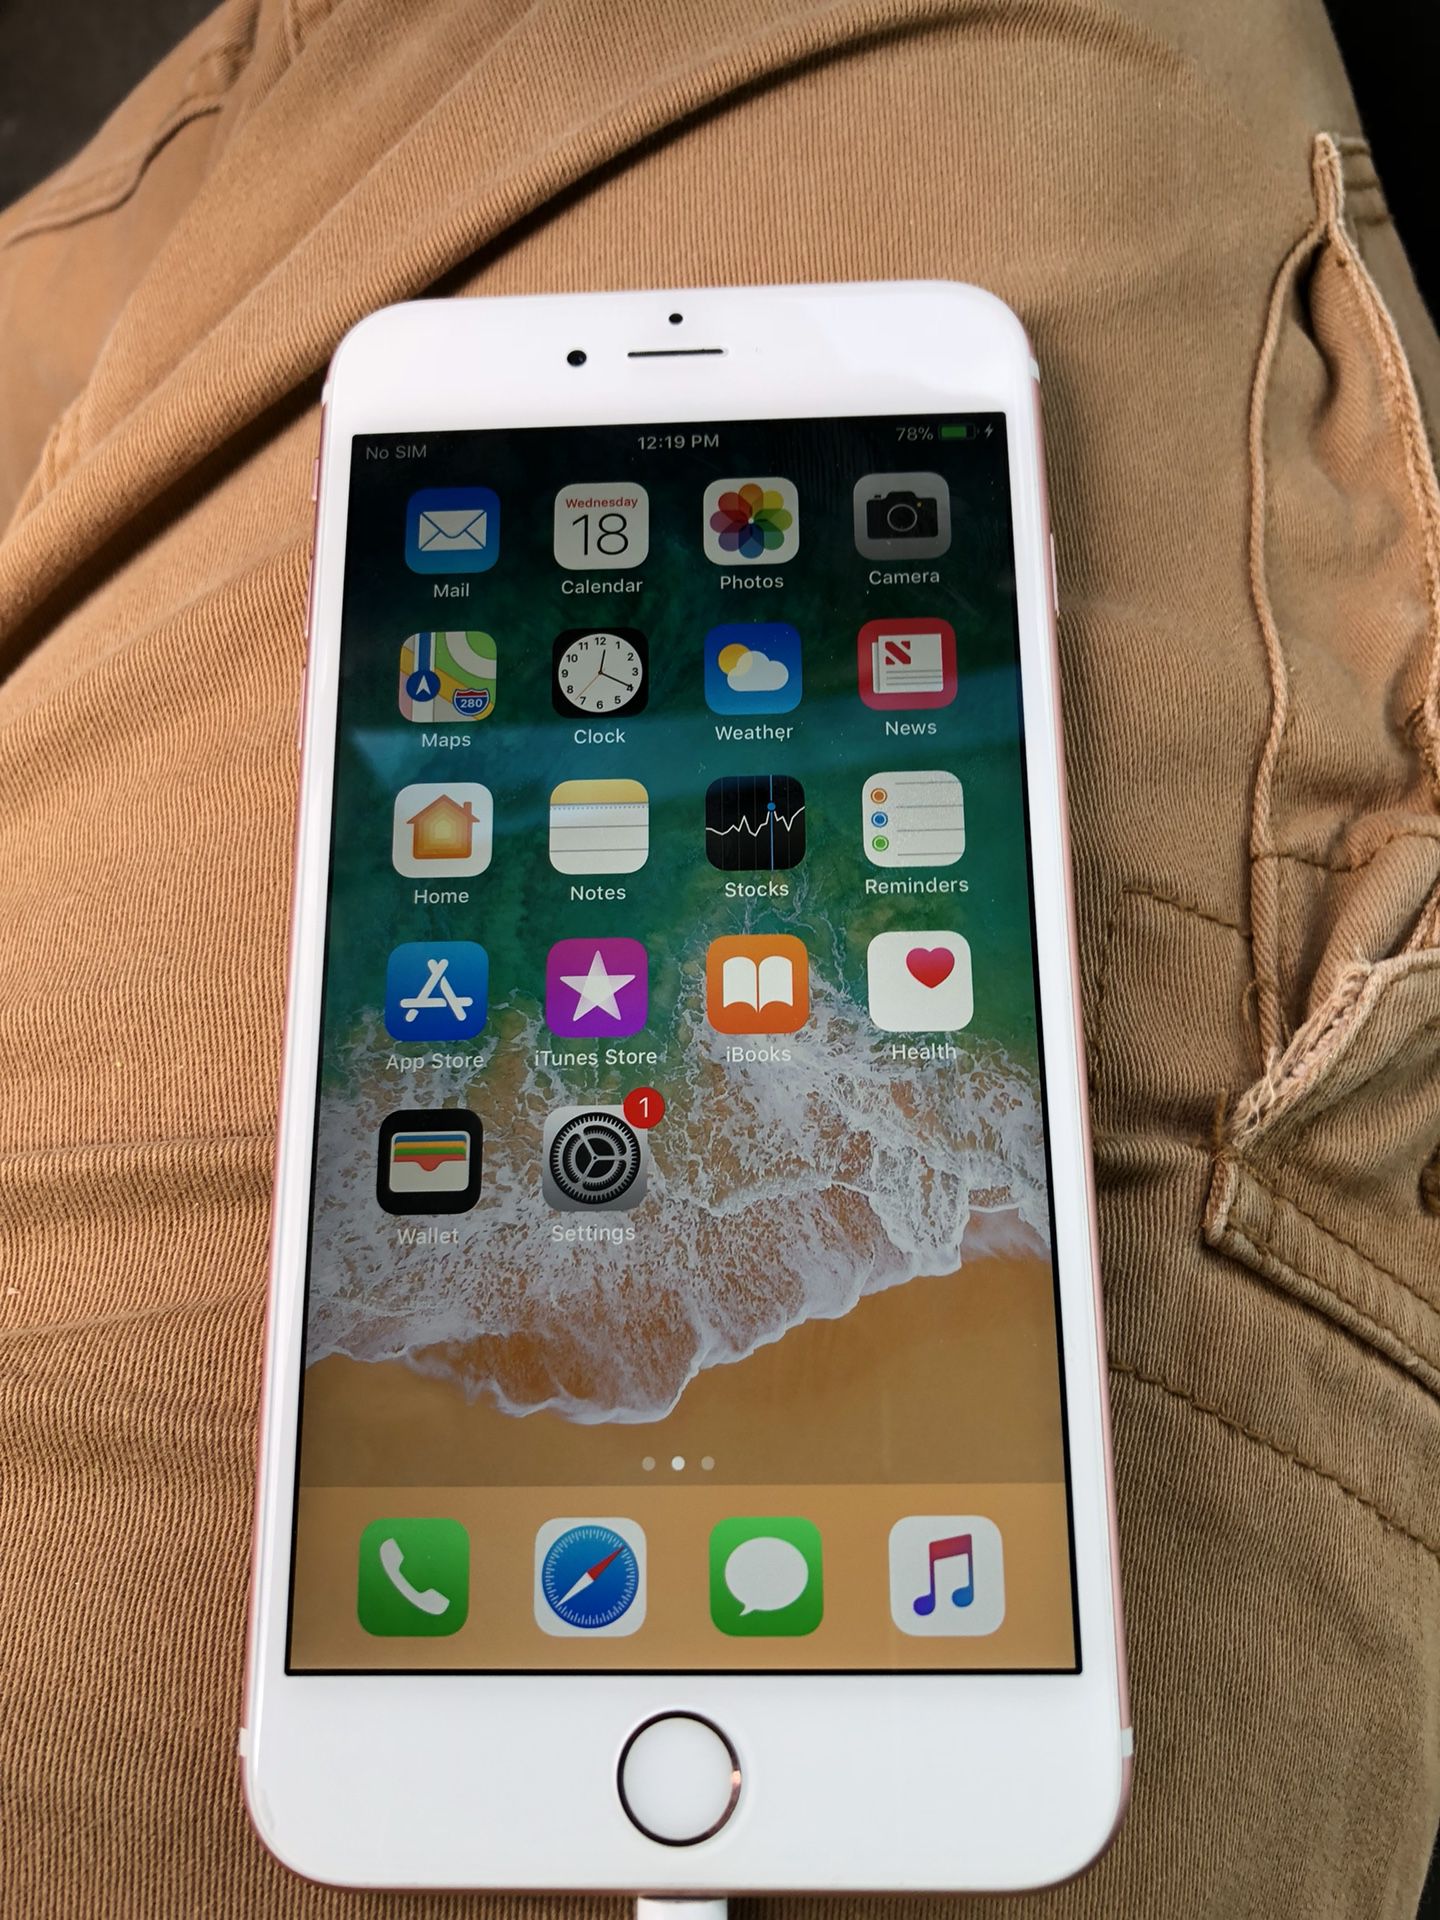 iPhone6S  32GB  GOLD  Y！Mobile バッテリー新品スマートフォン/携帯電話